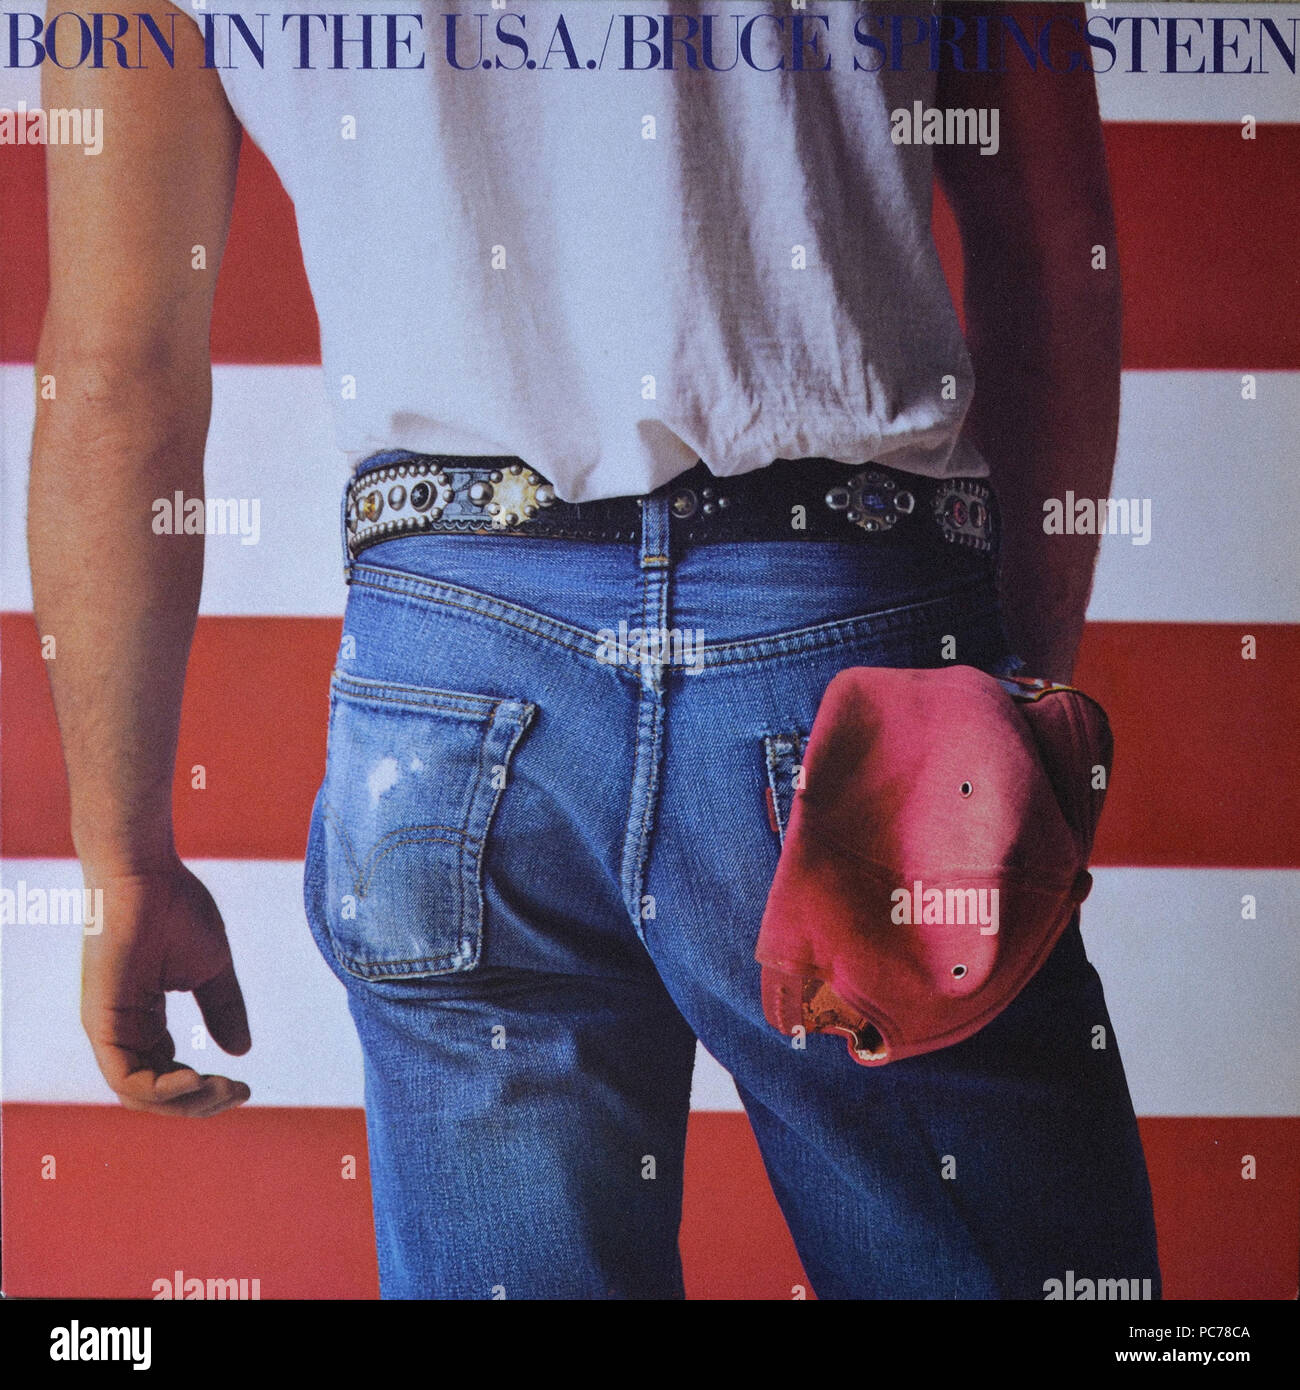 Bruce Springsteen - nato negli Stati Uniti - Vintage vinile copertina album Foto Stock